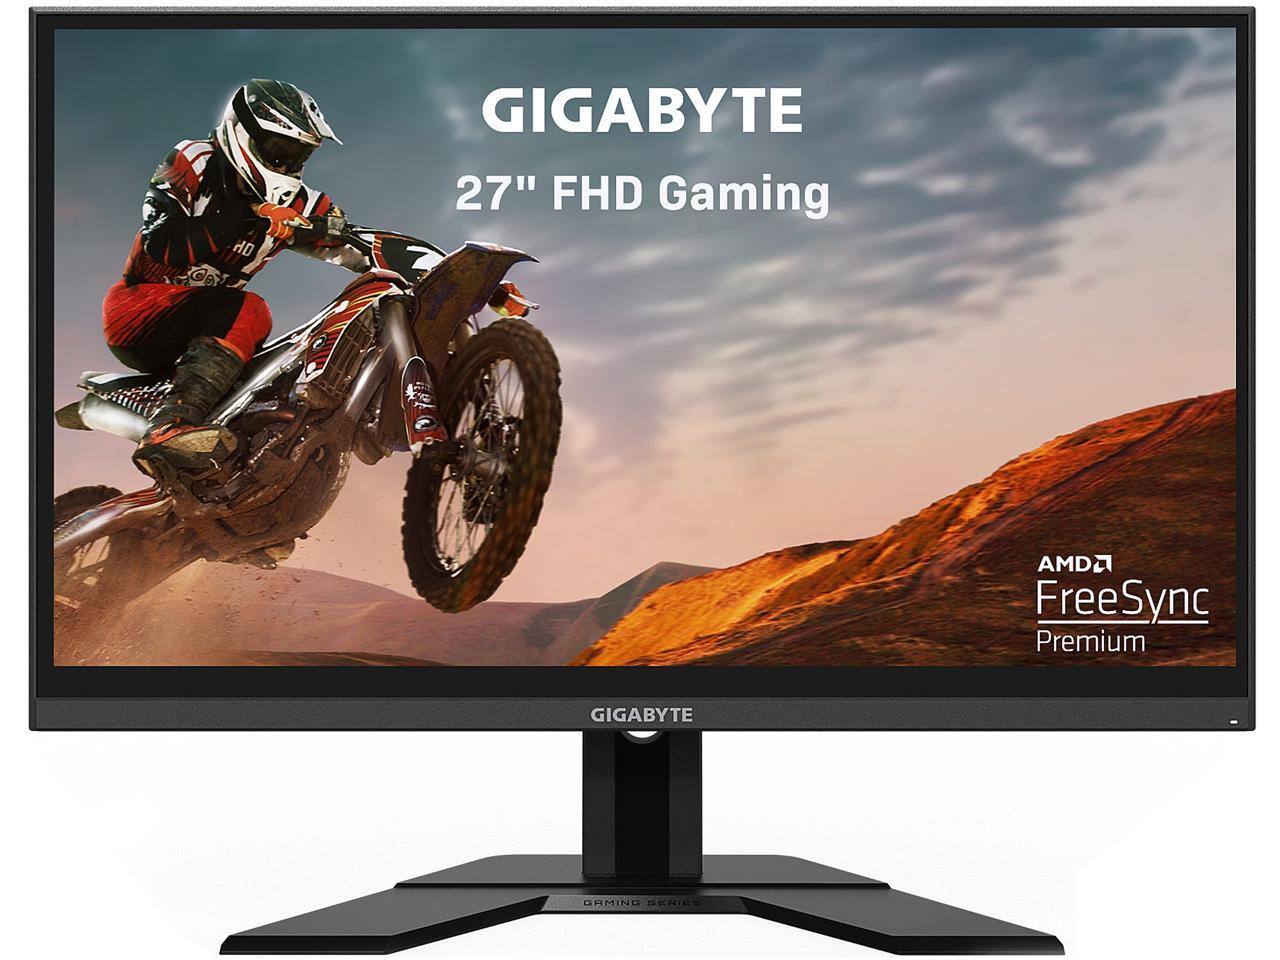 GIGABYTE G27F 27" 144Hz 1080P Gaming Monitor, 1920 x 1080 IPS Display, 1ms (MPRT) Response Time, 95% DCI-P3, FreeSync Premium, 1x DisplayPort 1.2, 2x HDMI 1.4 $209.99 AR Shipped